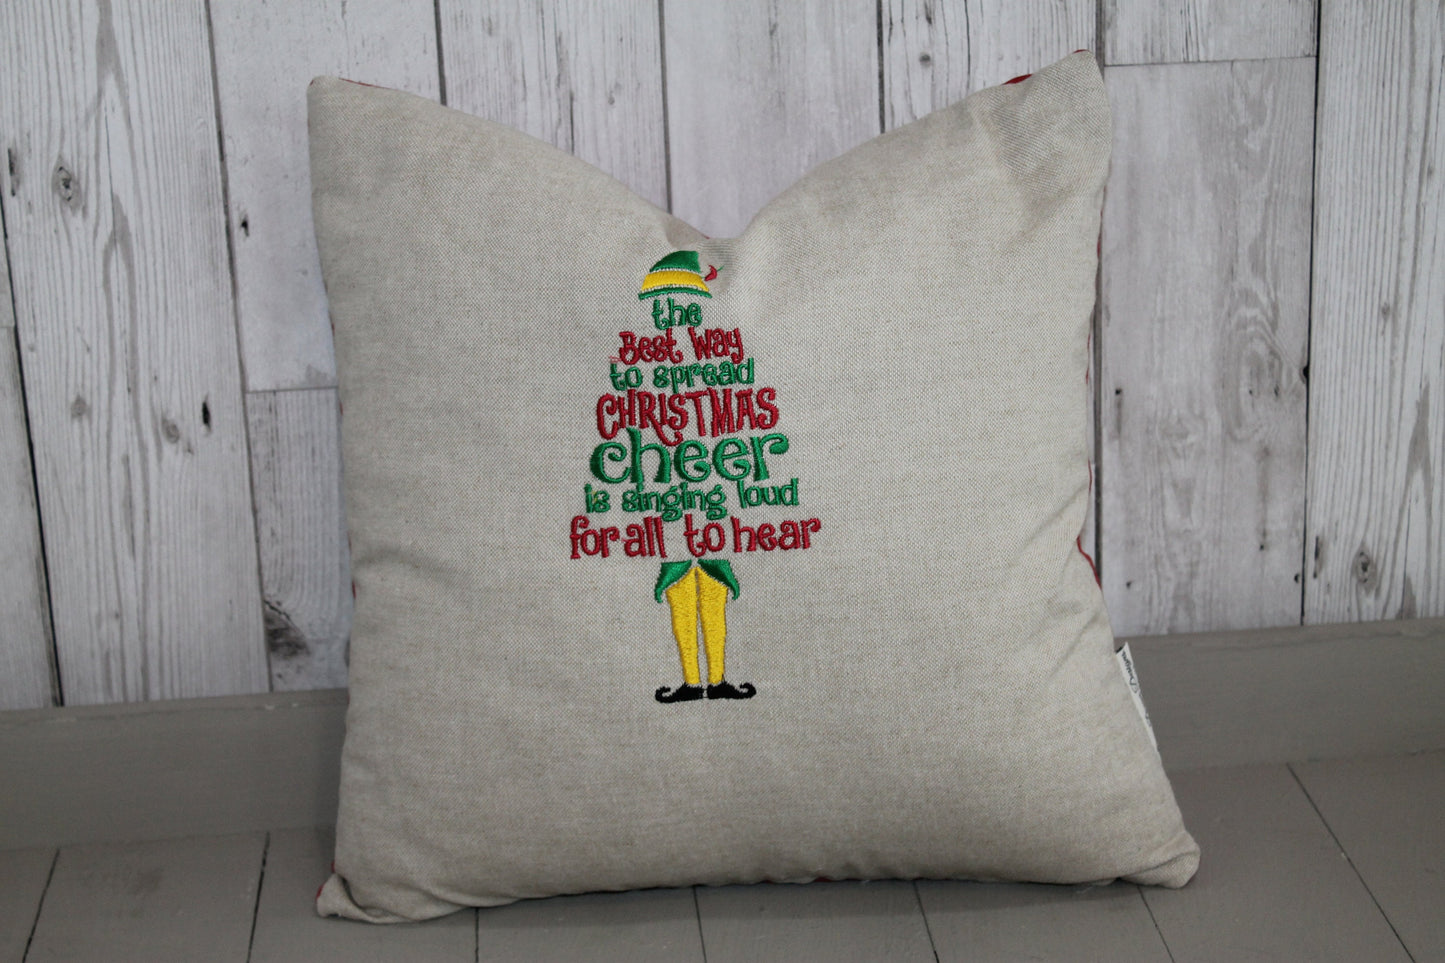 Buddy the Elf inspired Cushion. Best way to spread Christmas cheer. 16" Christmas Cushion.